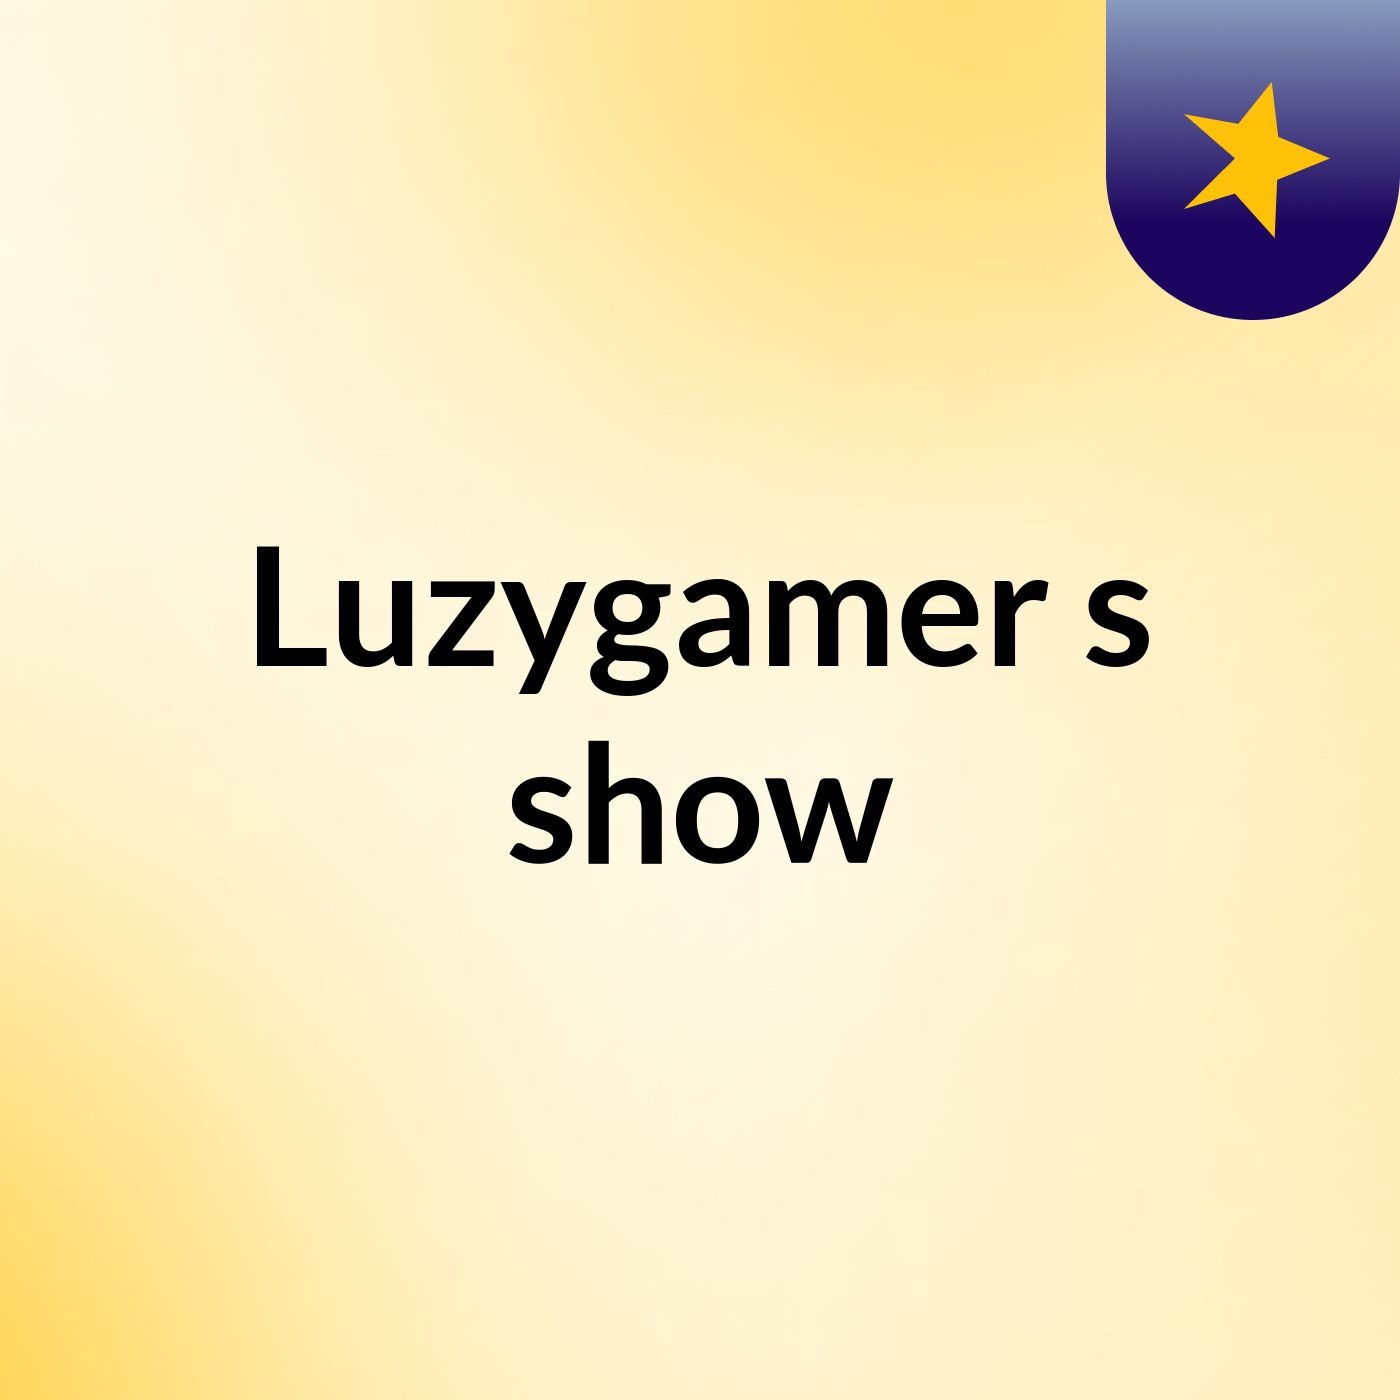 Luzygamer's show